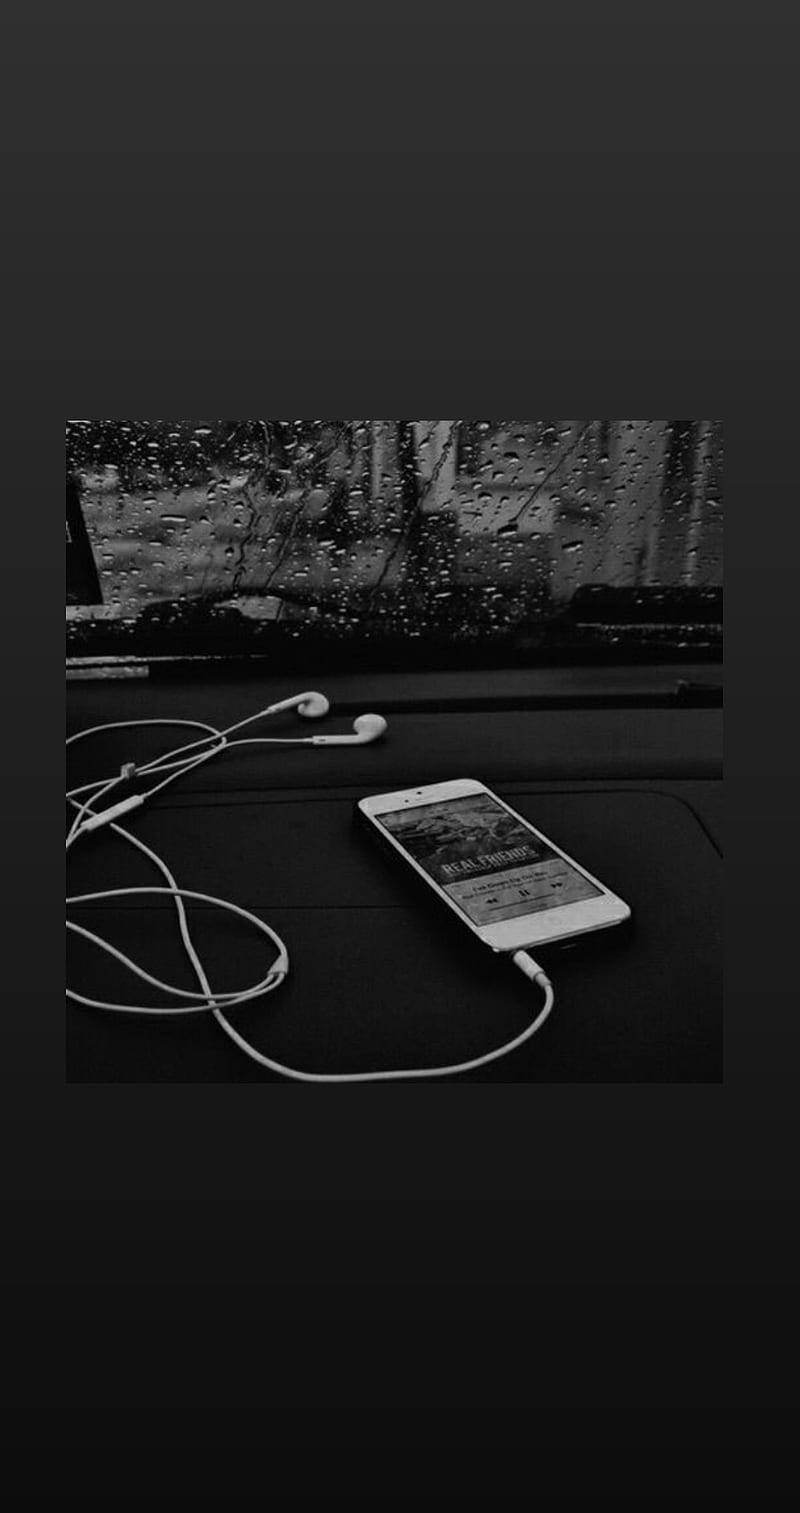  Musik Hintergrundbild 800x1513. Download Music Aesthetic Black And White Wallpaper